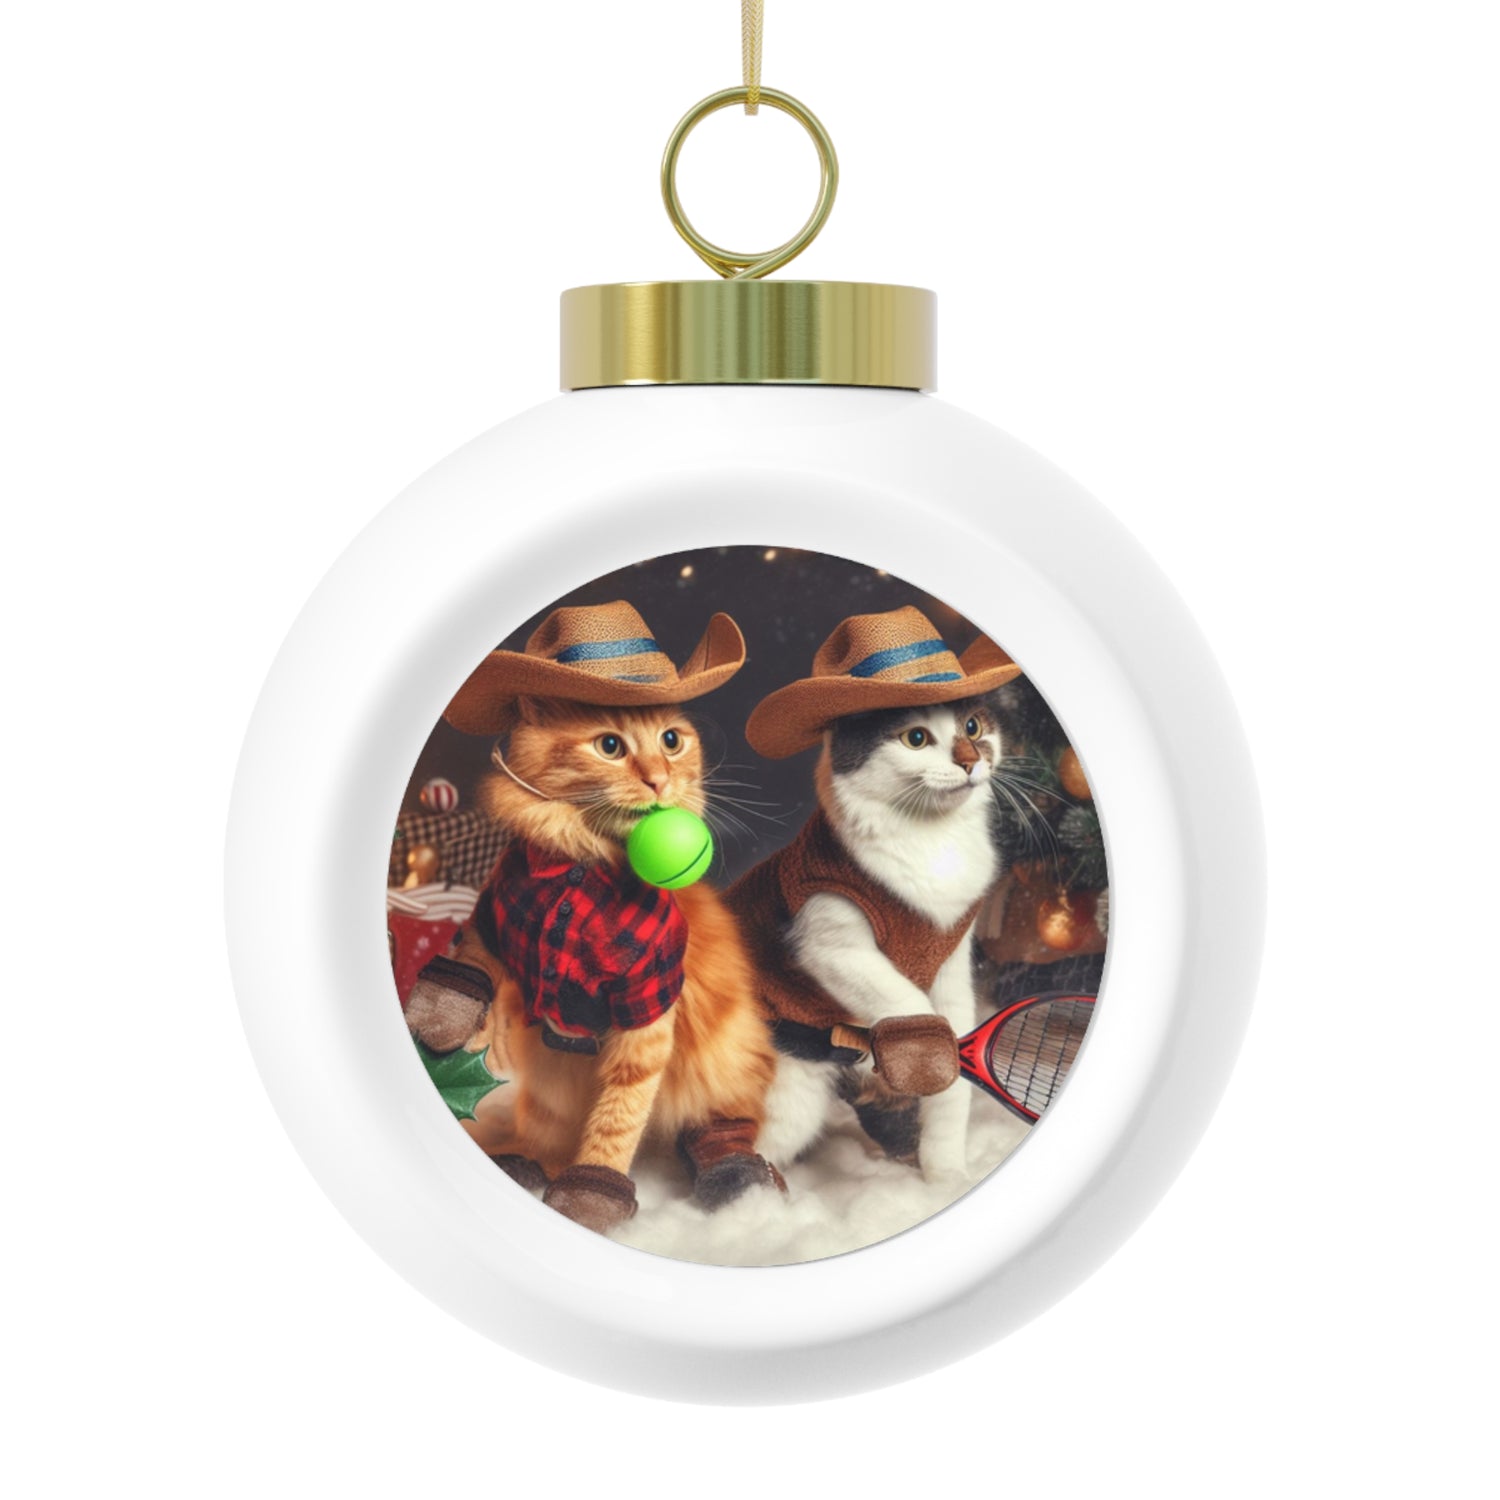 Western Cats & Pickleball Christmas Ornament - Unique 3" Ceramic Ball with Festive Design